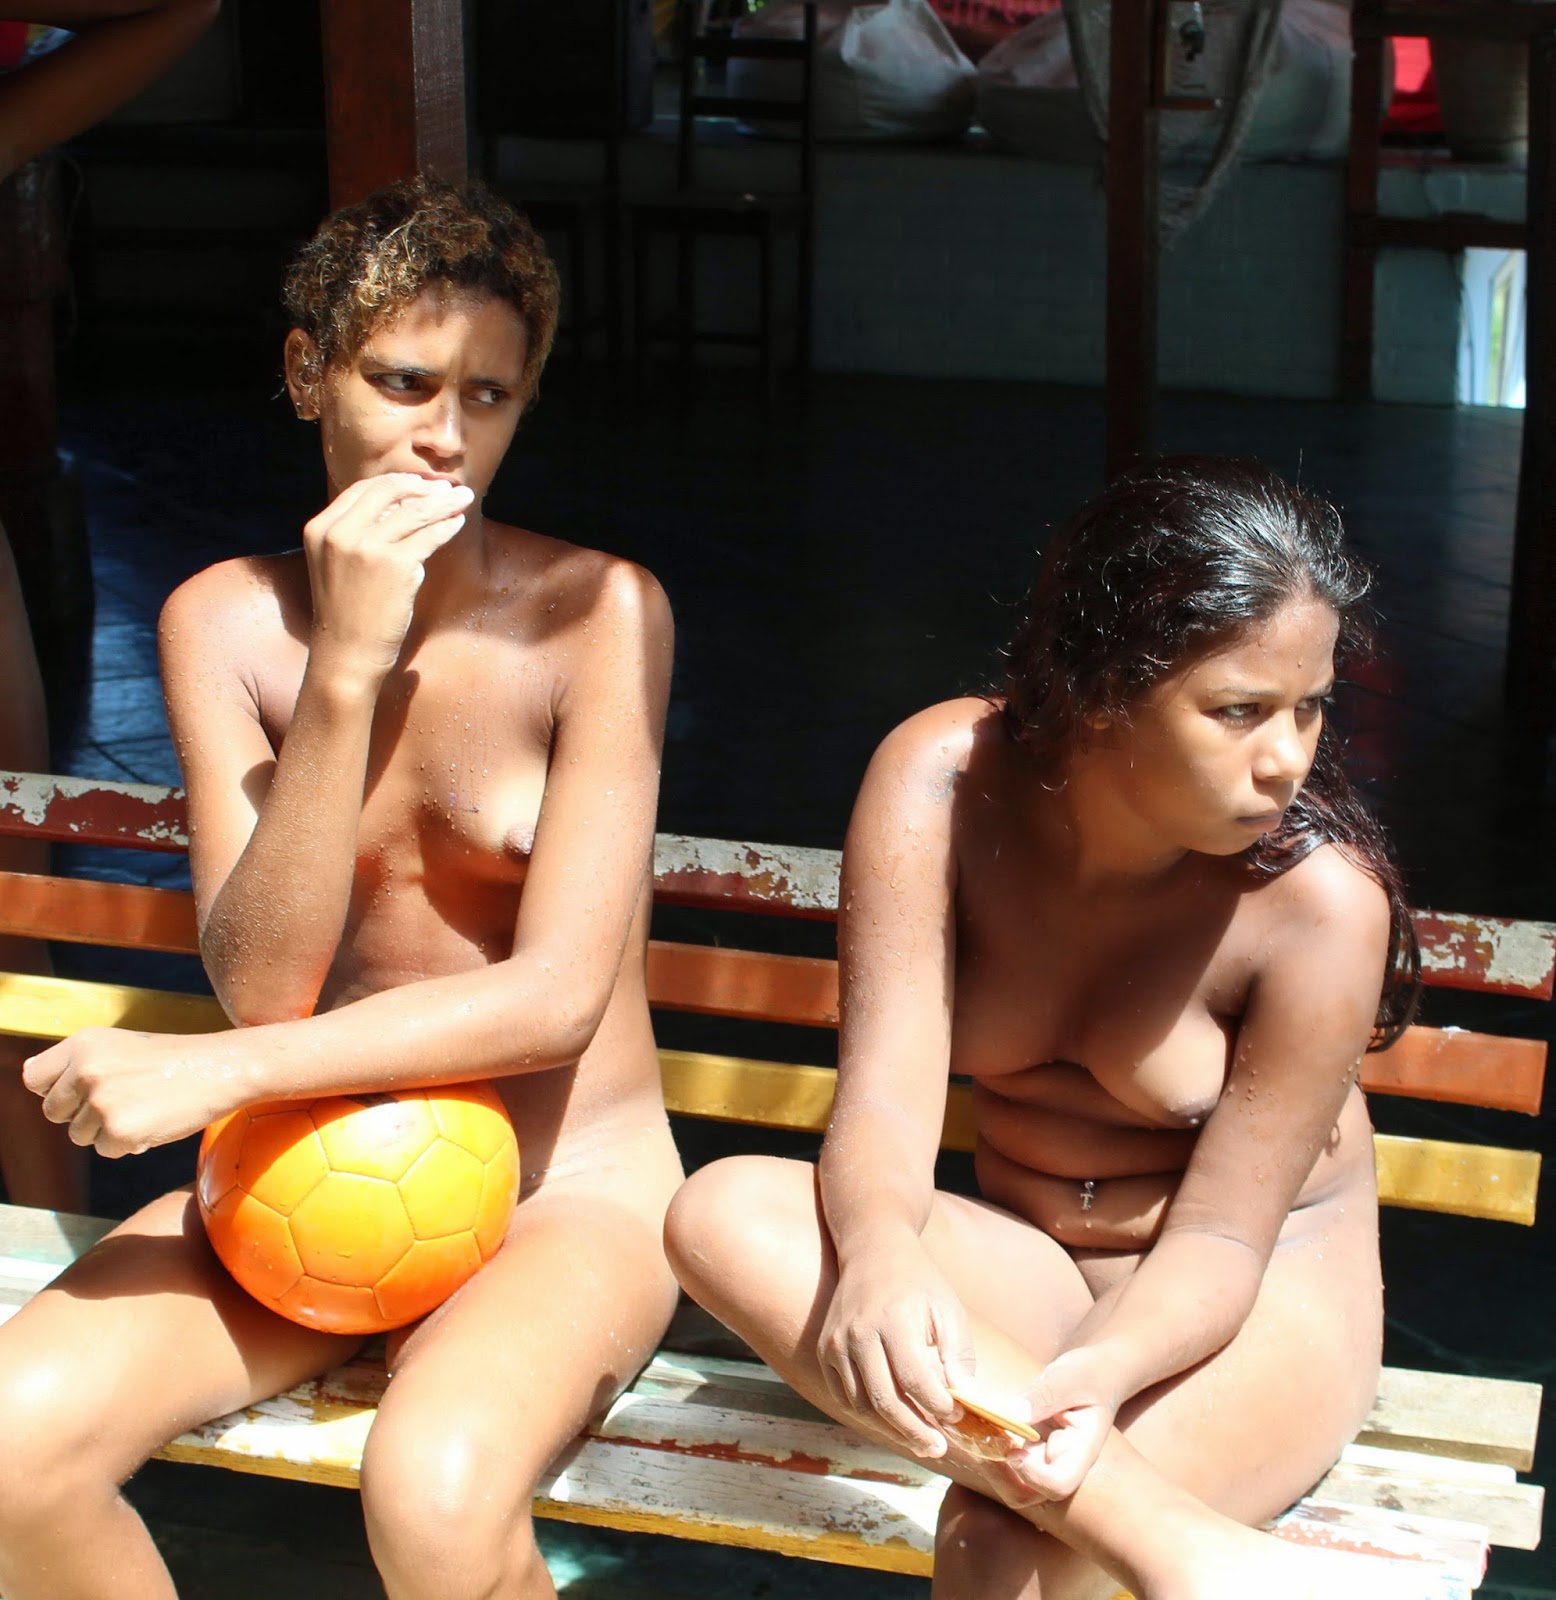 Naked girls teens nudists amateur brazil - Best porno